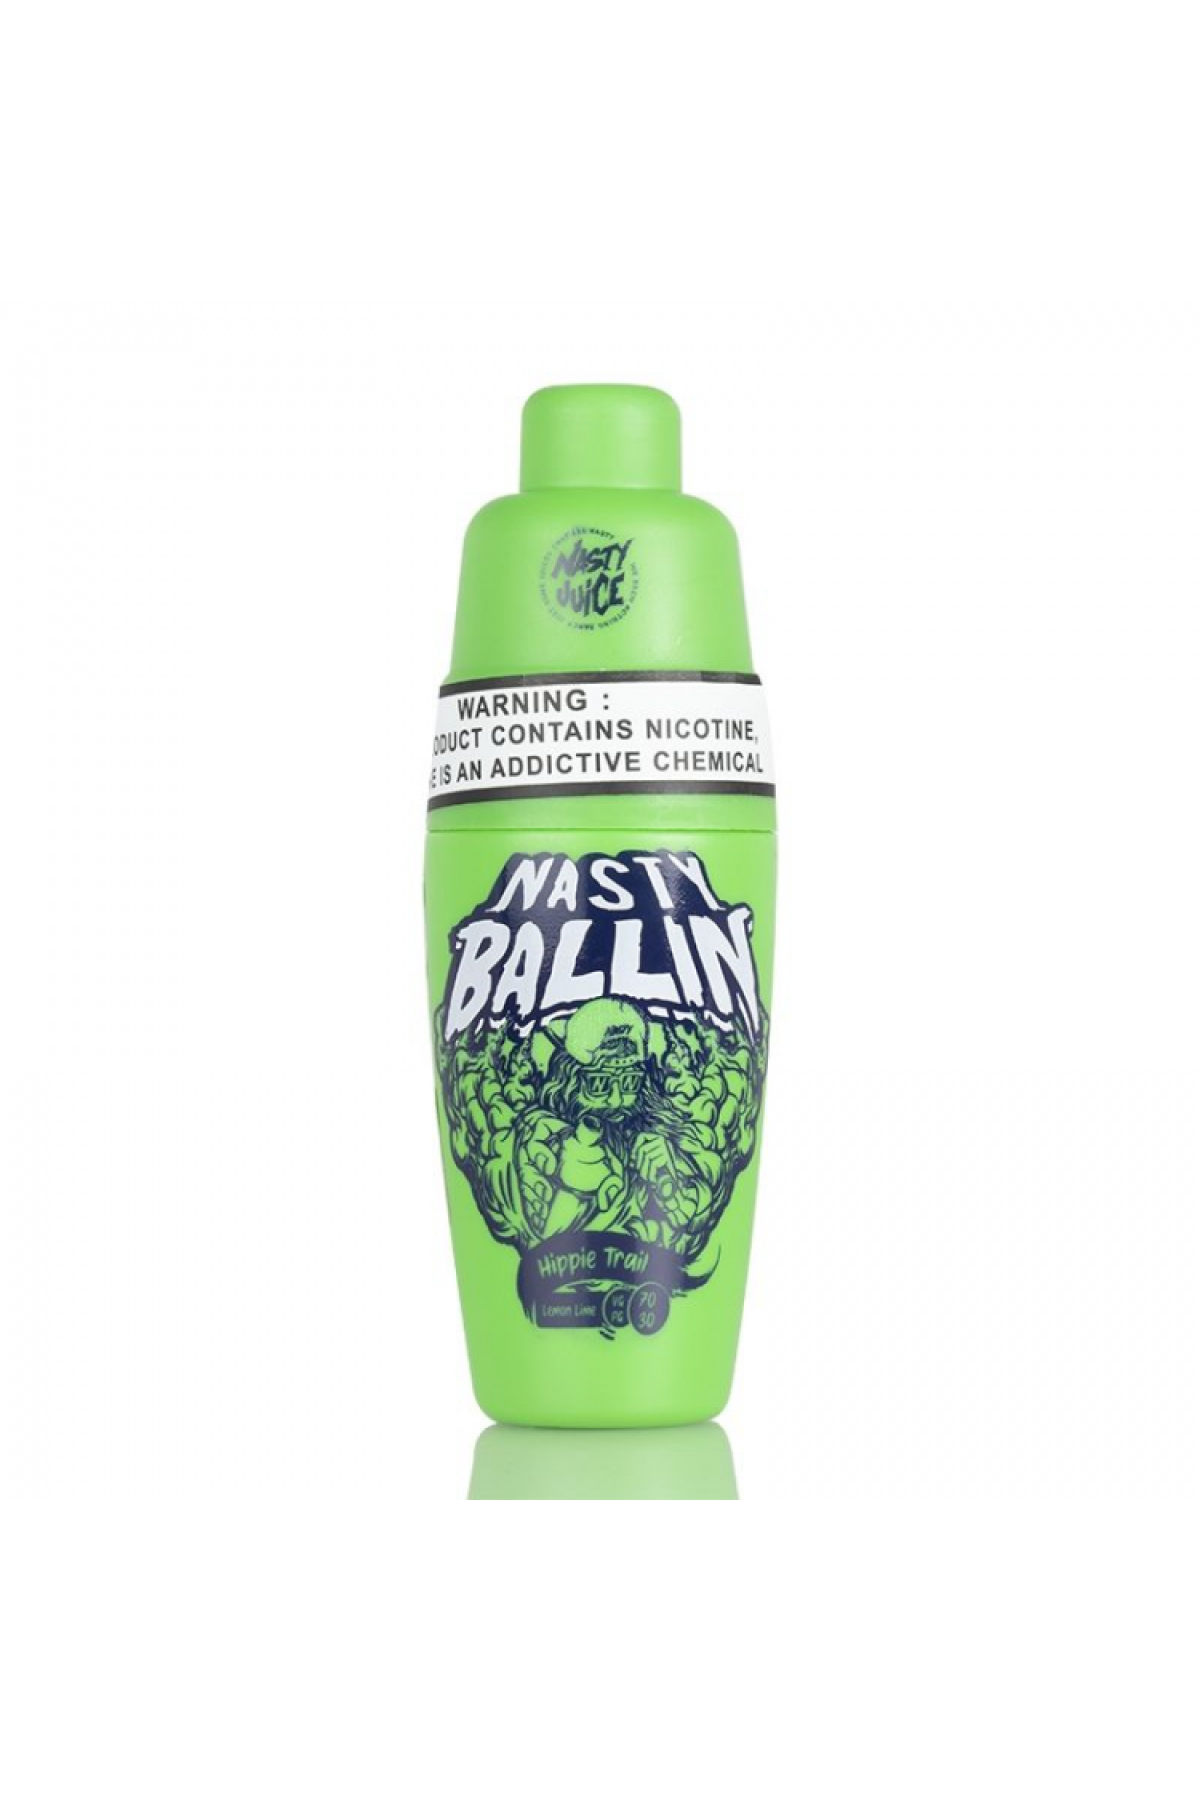 Nasty Juice "Ballin" - Hippie Trail Premium Likit